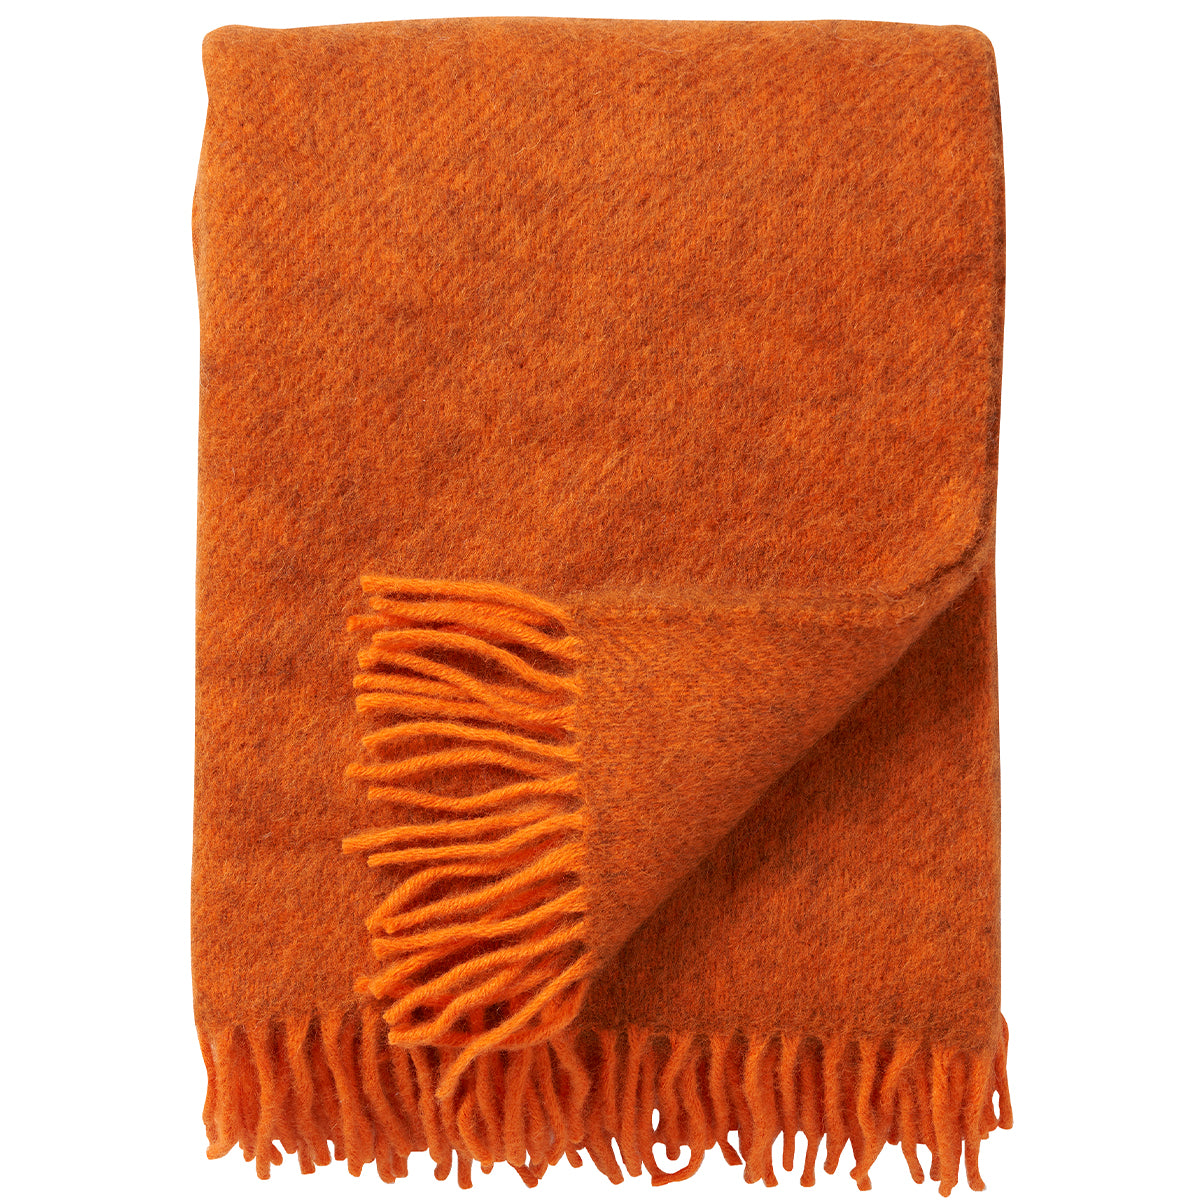 Gotland Orange 130x200cm Brushed Wool Throw